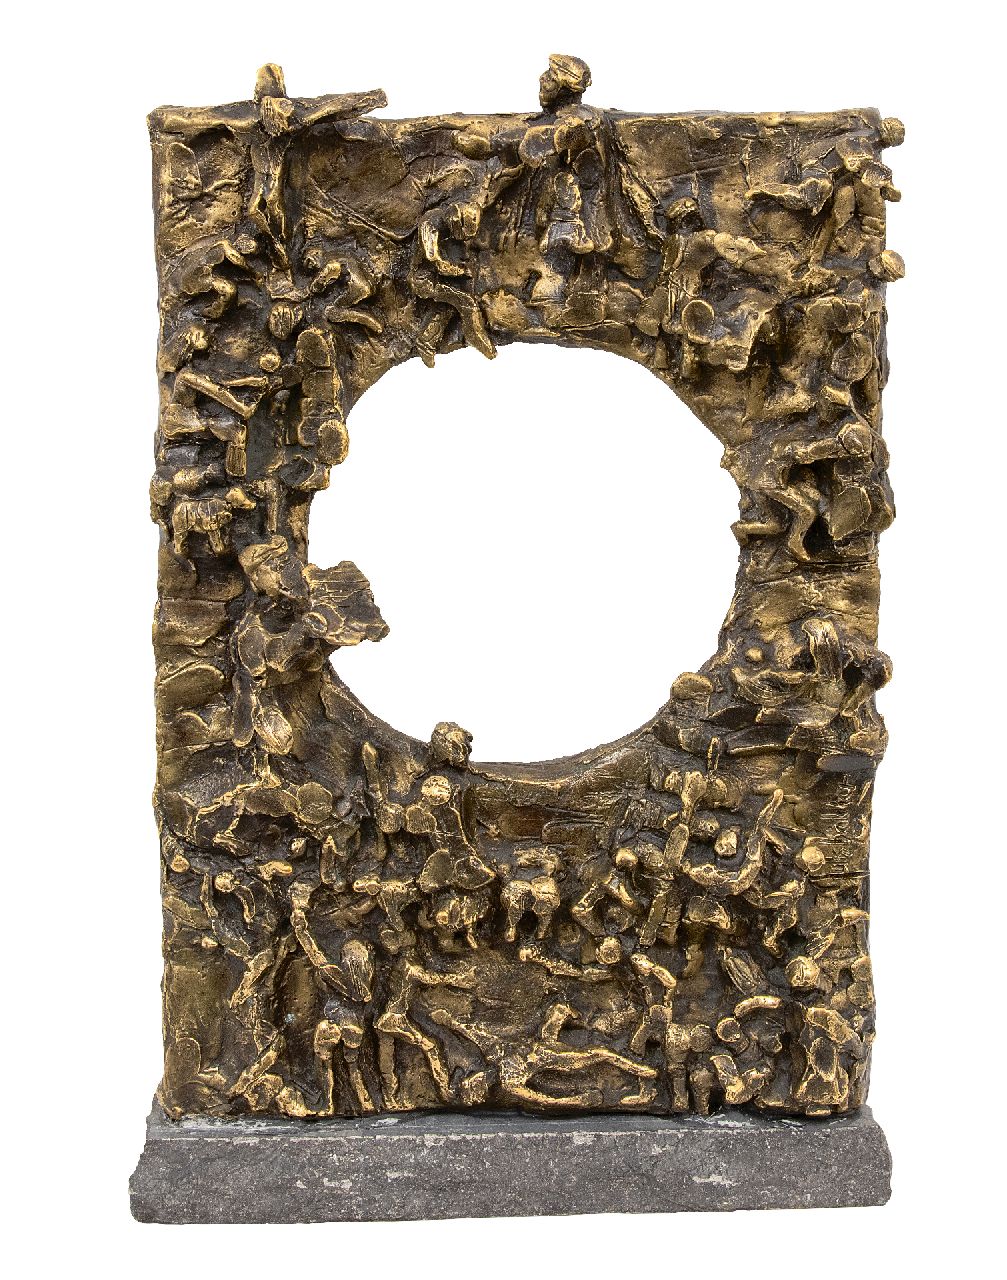 Bakker W.F.  | Willem Frederik 'Jits' Bakker | Sculptures and objects offered for sale | Bible relief, bronze 45.0 x 29.7 cm, signed c.r.